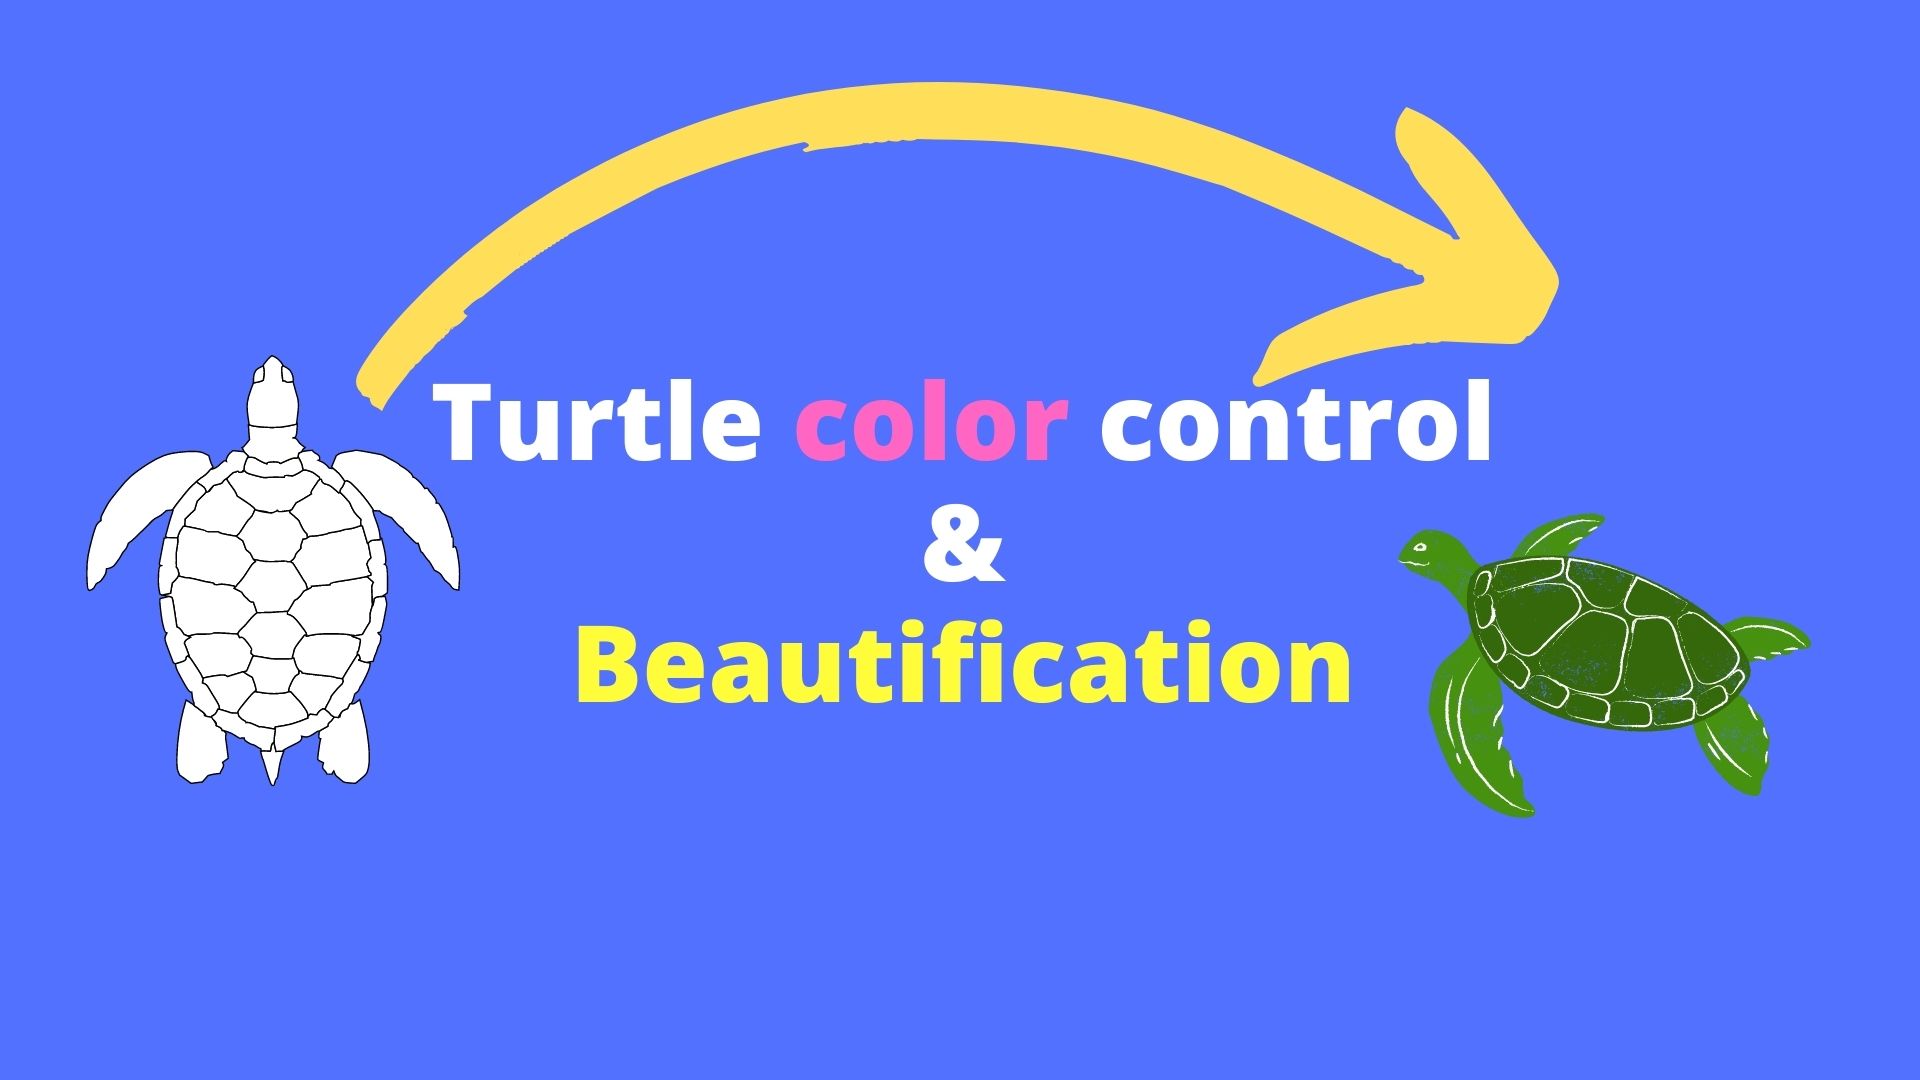 Turtle color control & Beautification